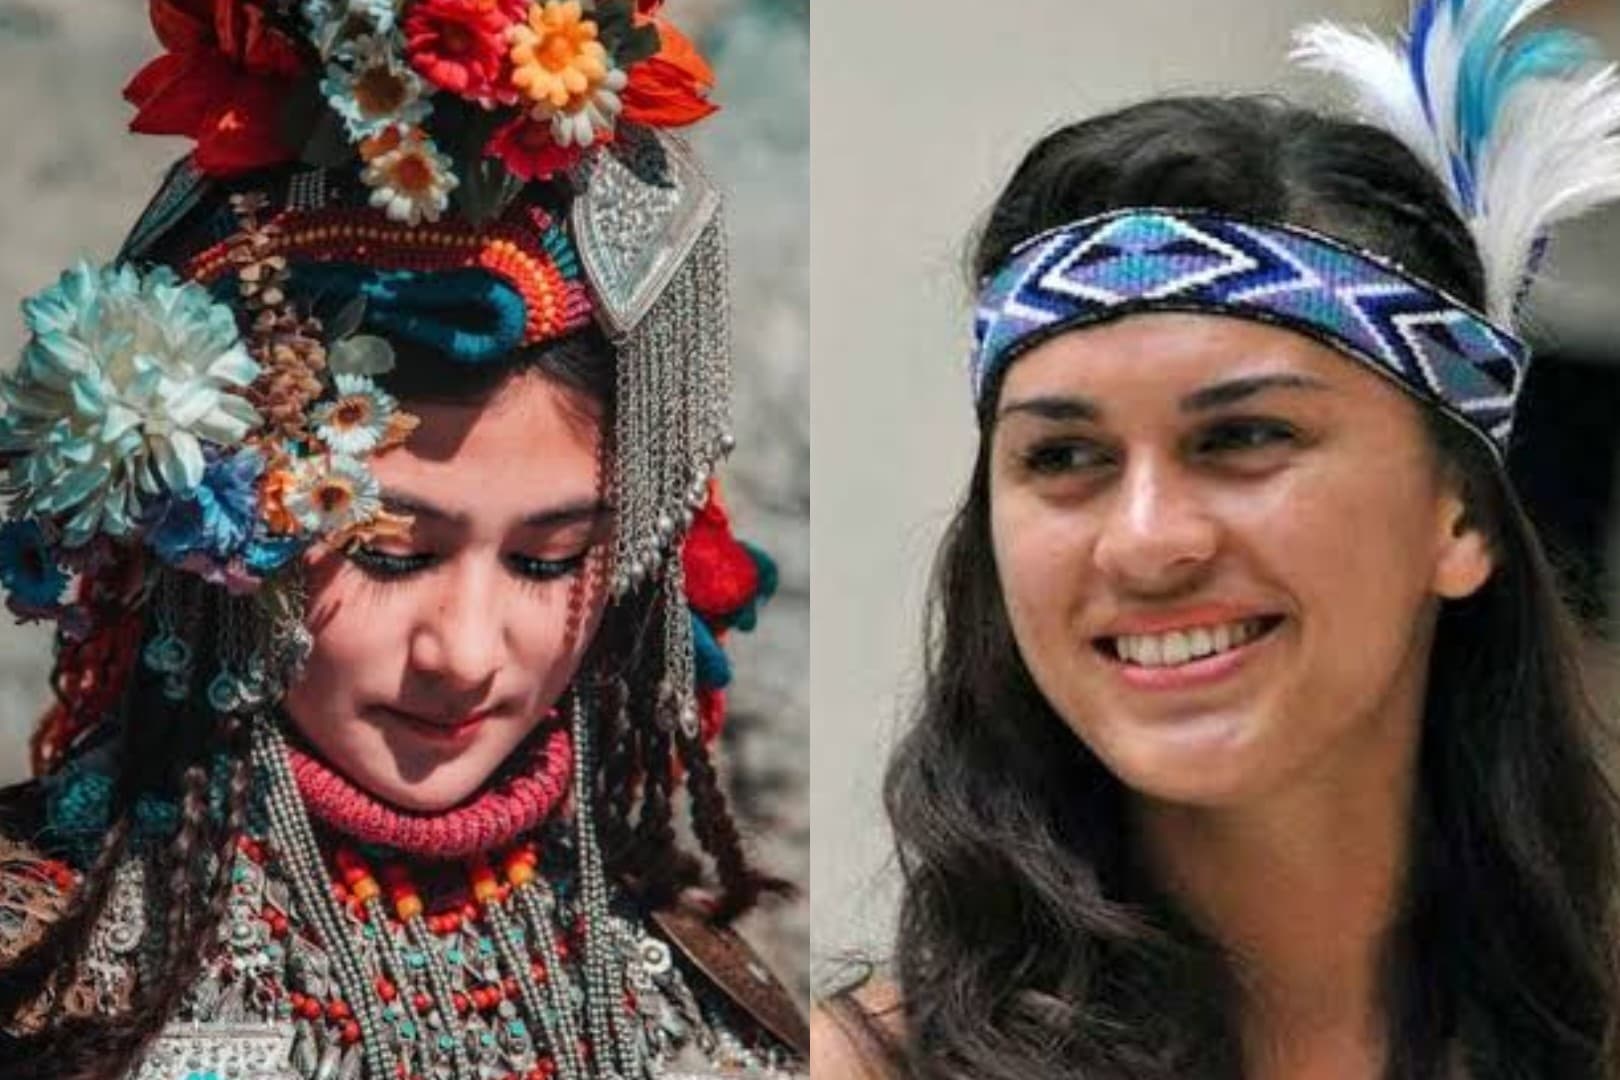 5 Suku di Dunia Penghasil Wanita Cantik, Nomor 4 Terkenal Ganas